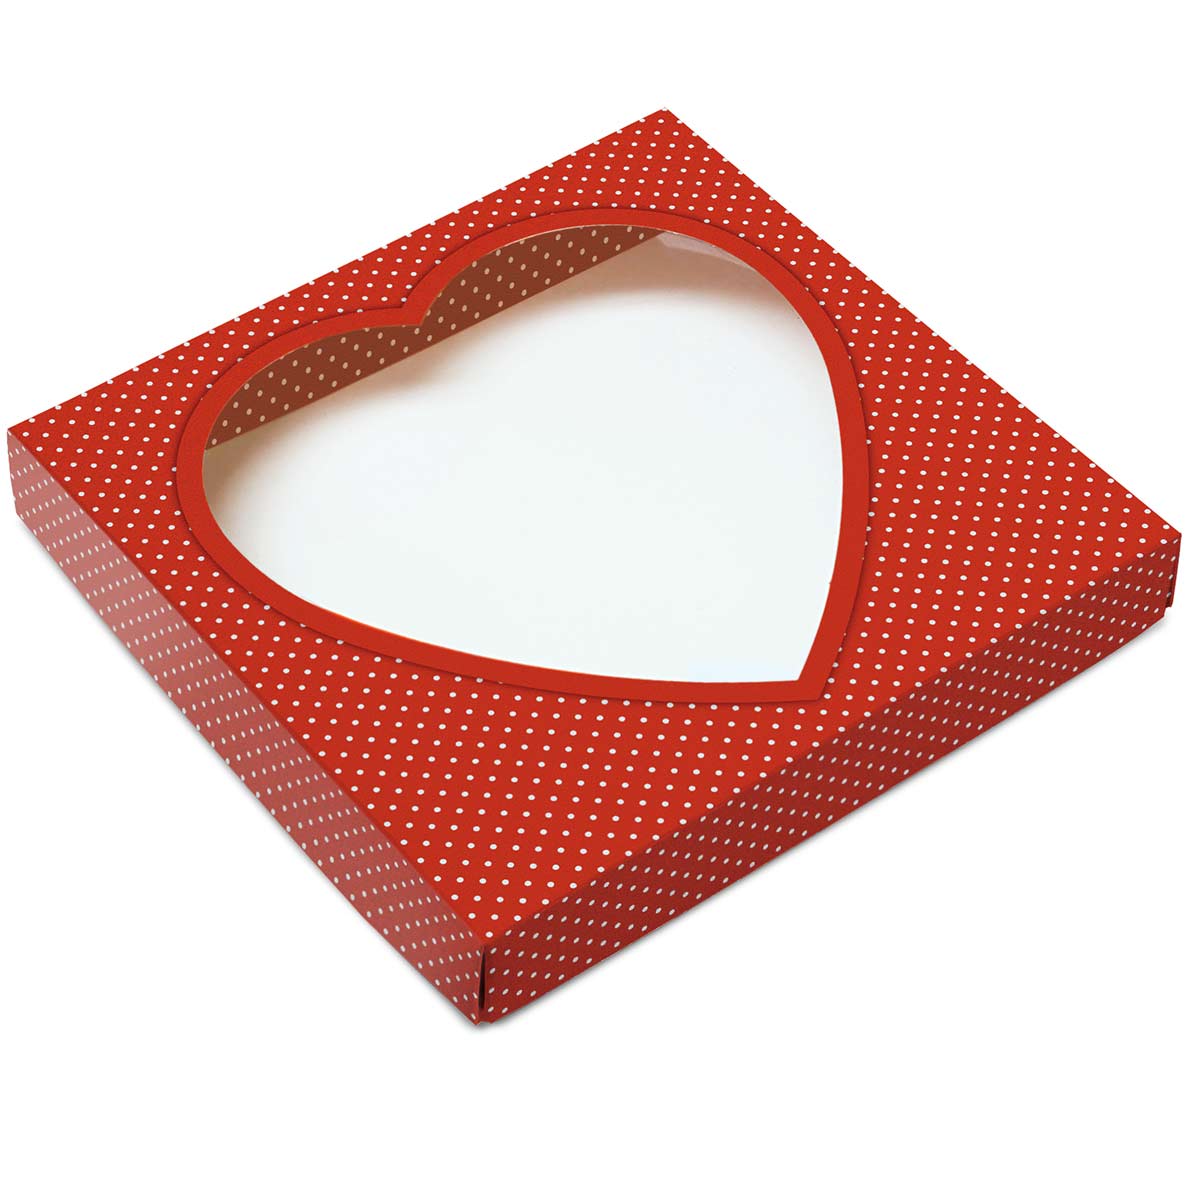 Red Heart Valentine's Day Gift box with Milk and Dark Cordial Cherries Sugar Free